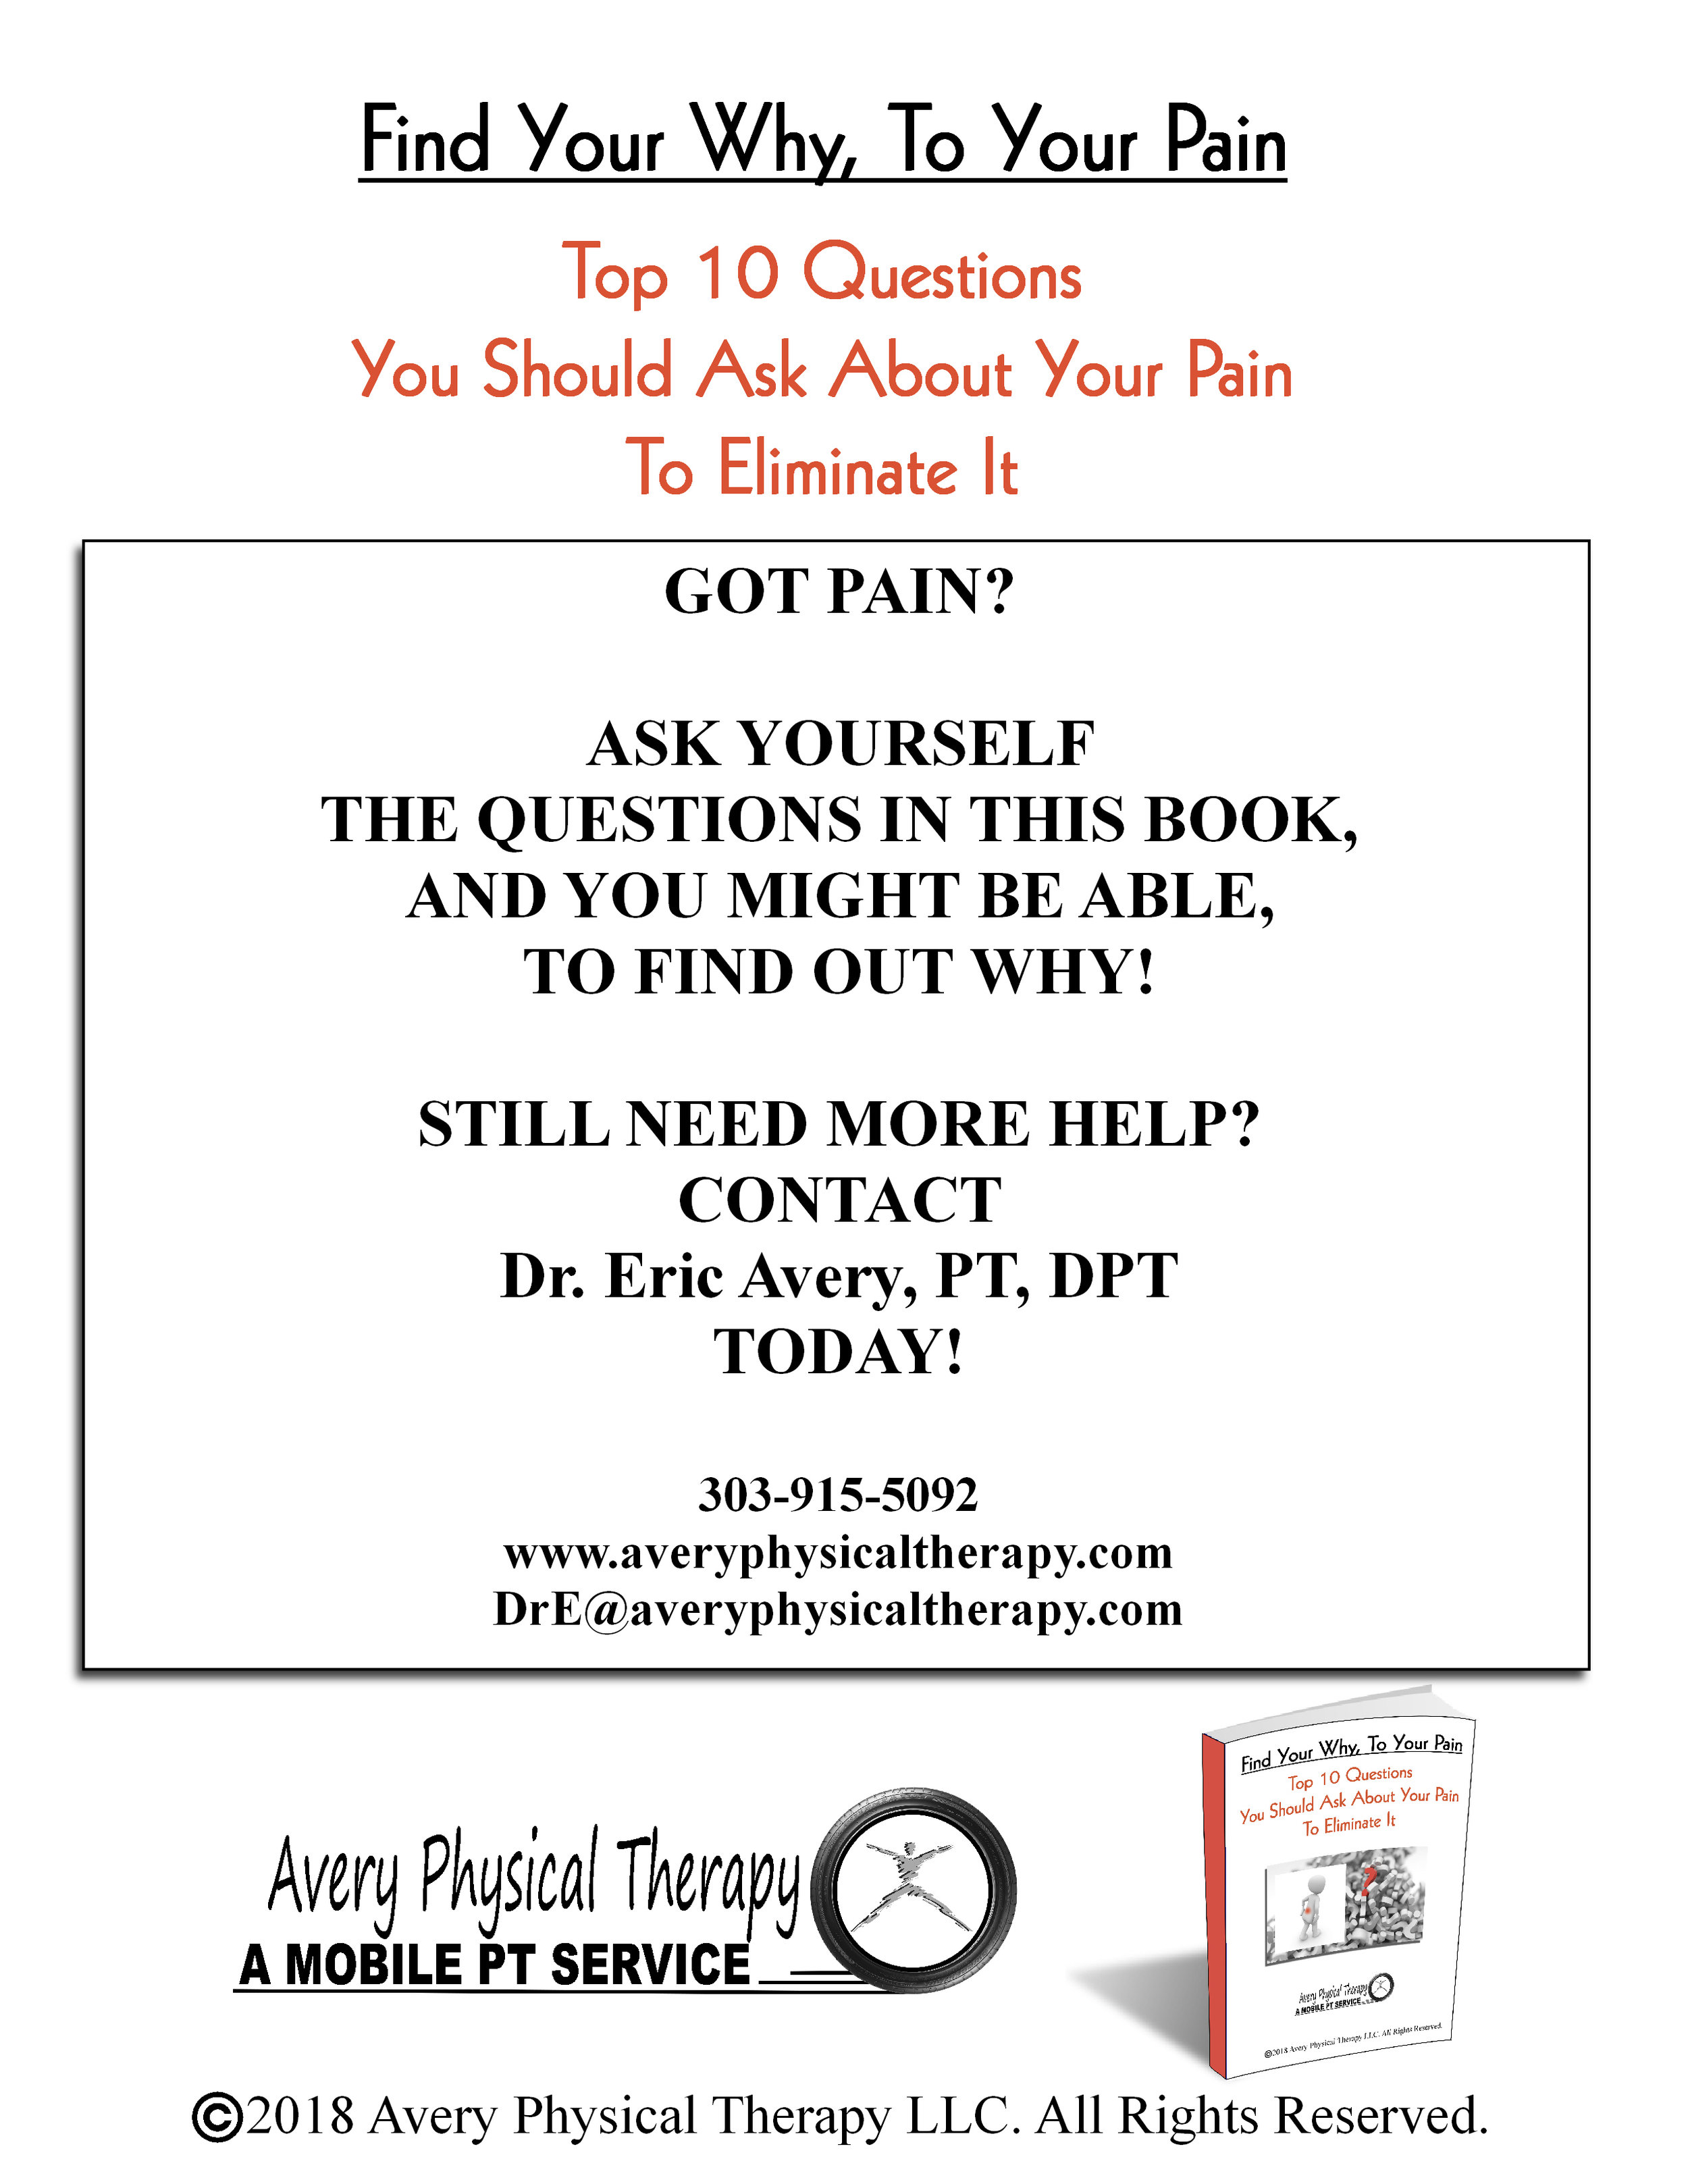 Top 10 Pain Questions 4-6B.JPG